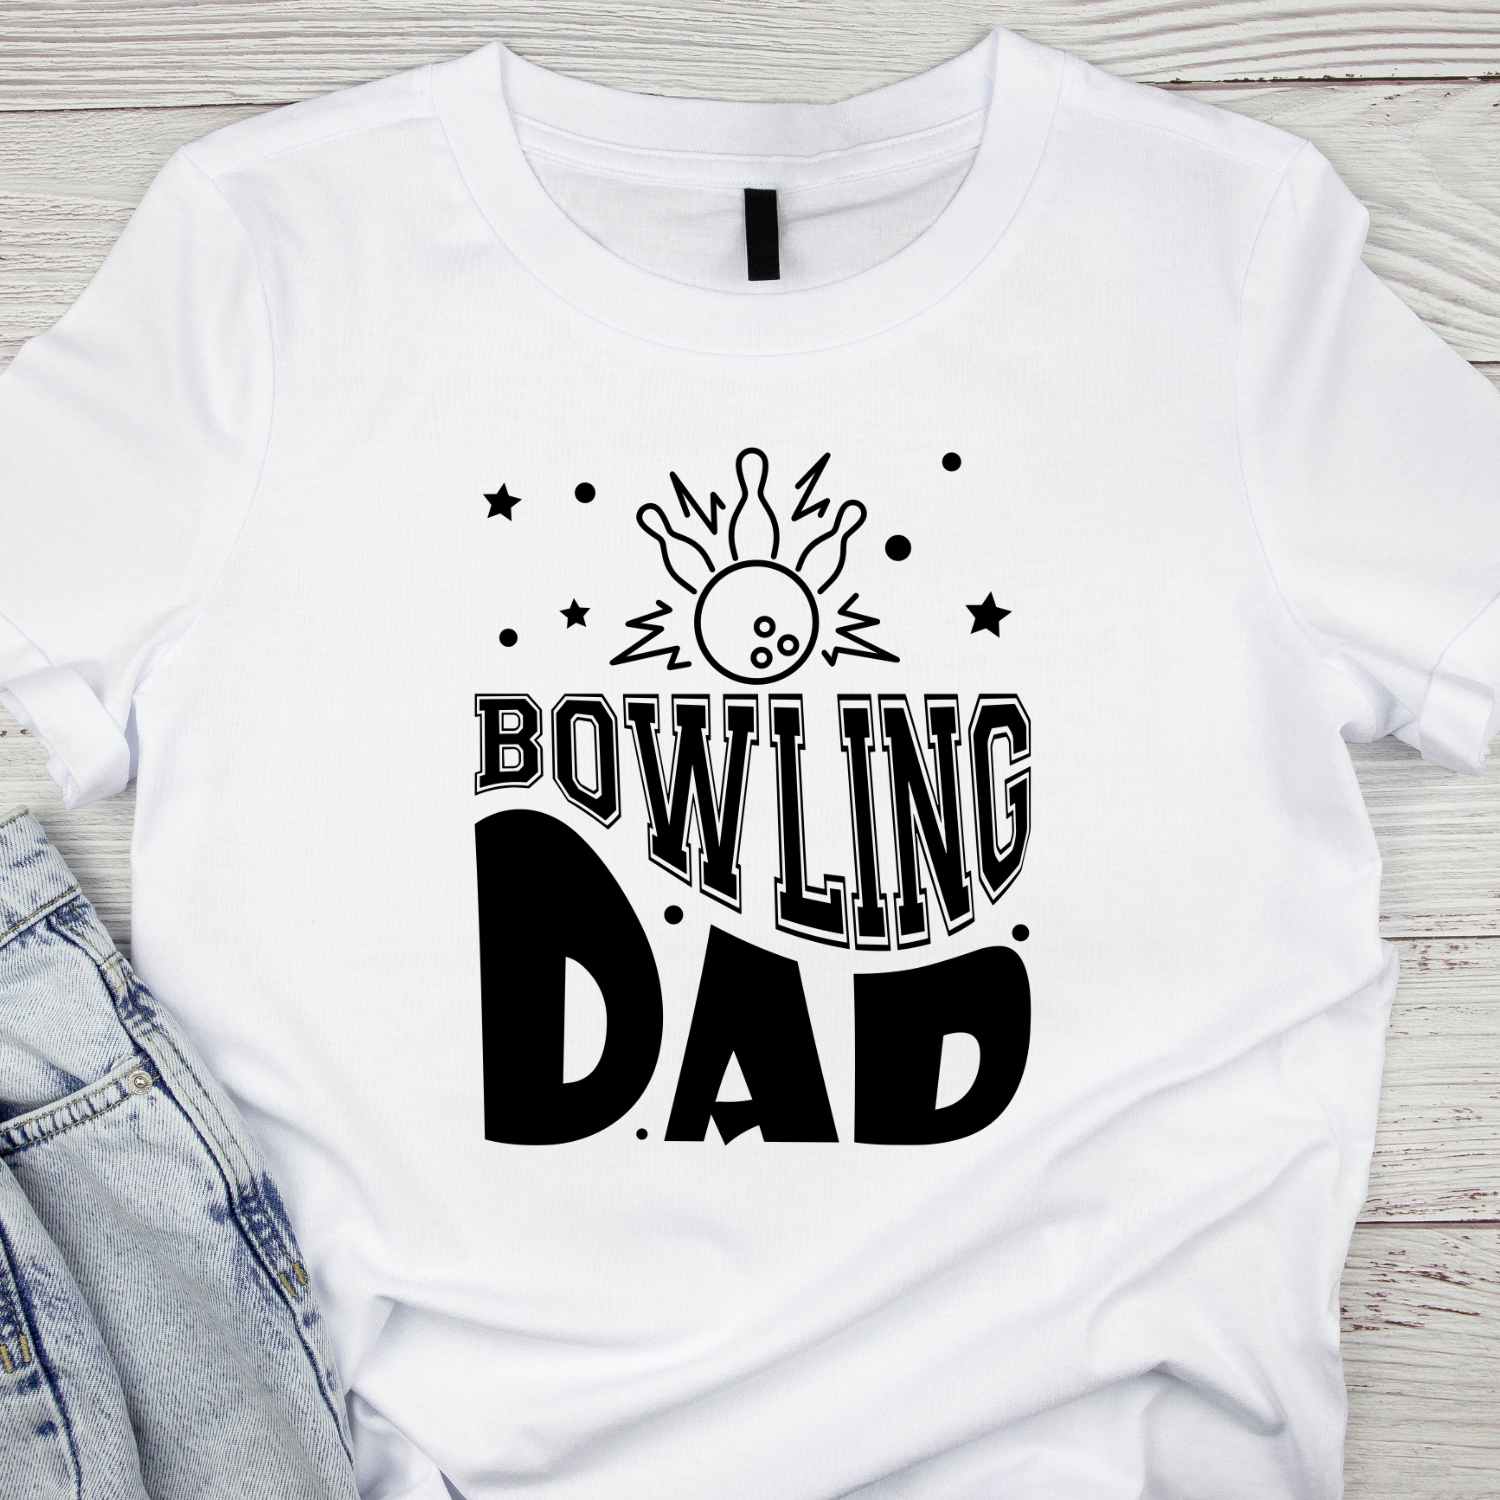 Bowling Dad T-shirt Design for Men